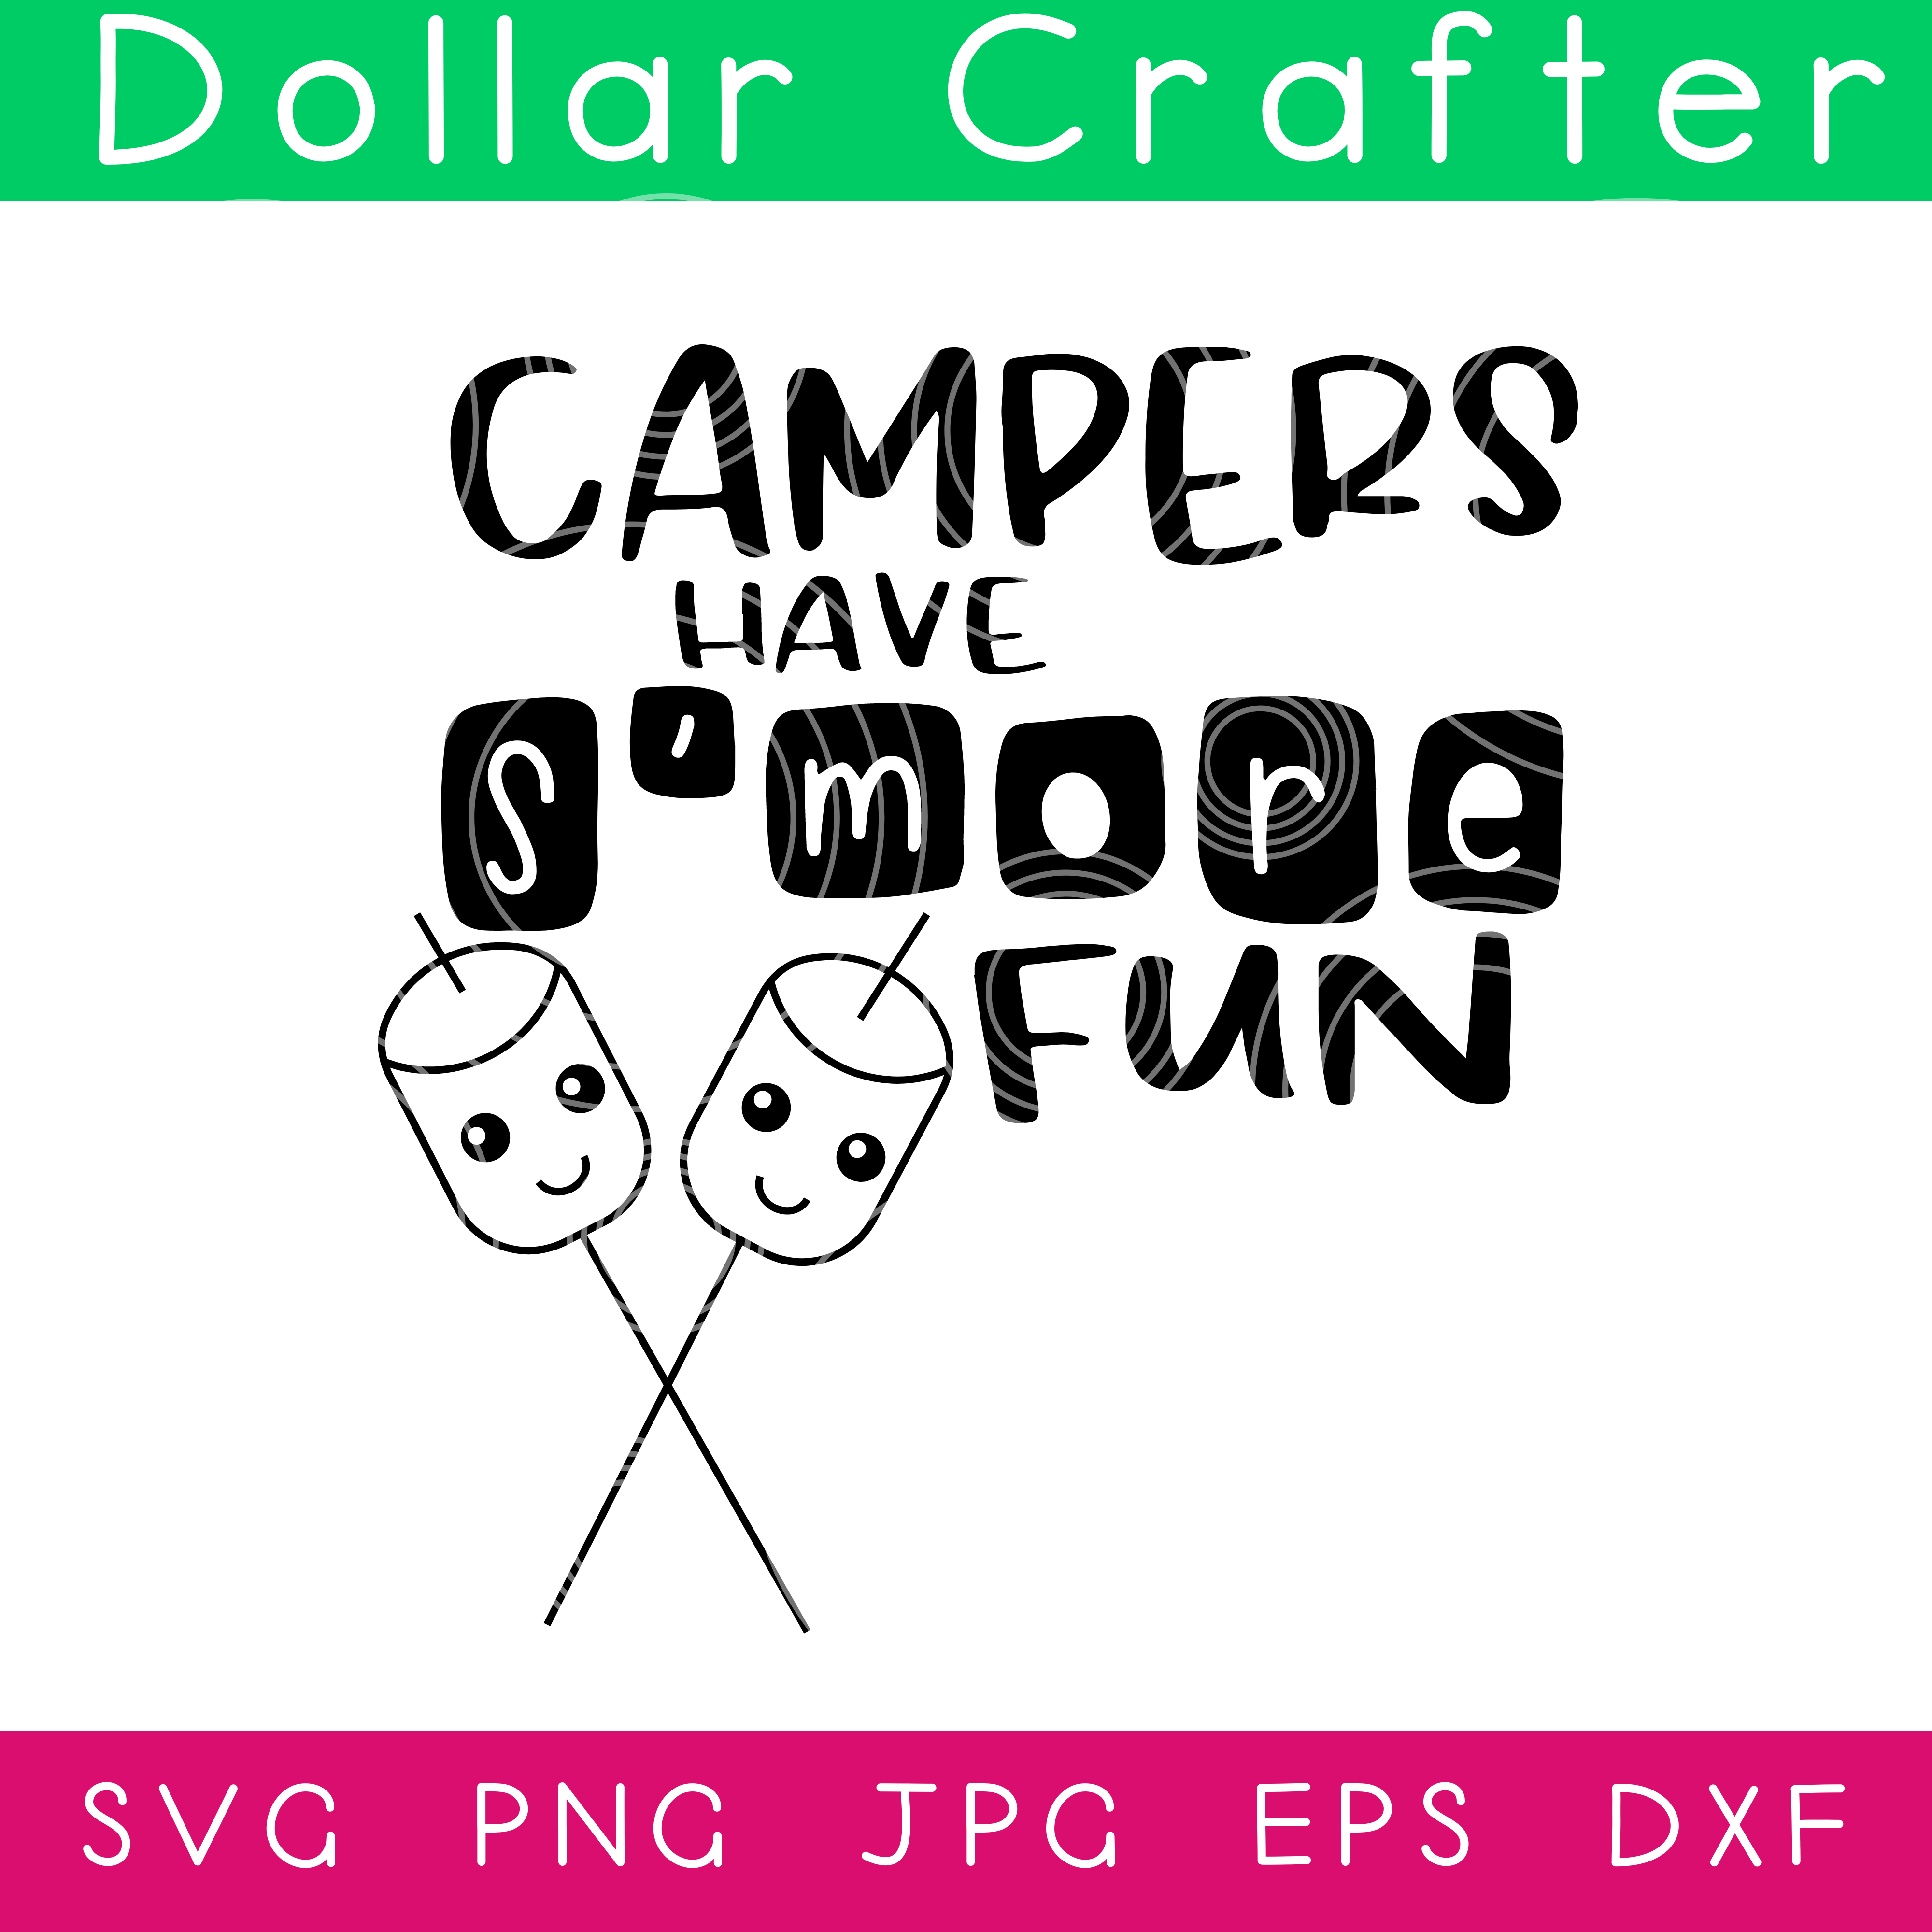 Camper Have S'more Fun SVG Cut File Set for Cricut or Silhouette